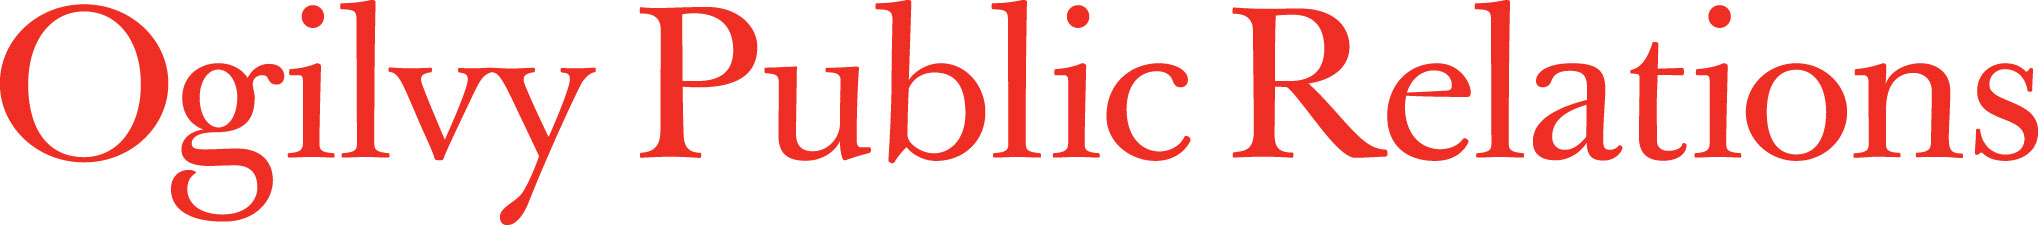  Top Online Public Relations Business Logo: Ogilvy Public Relations